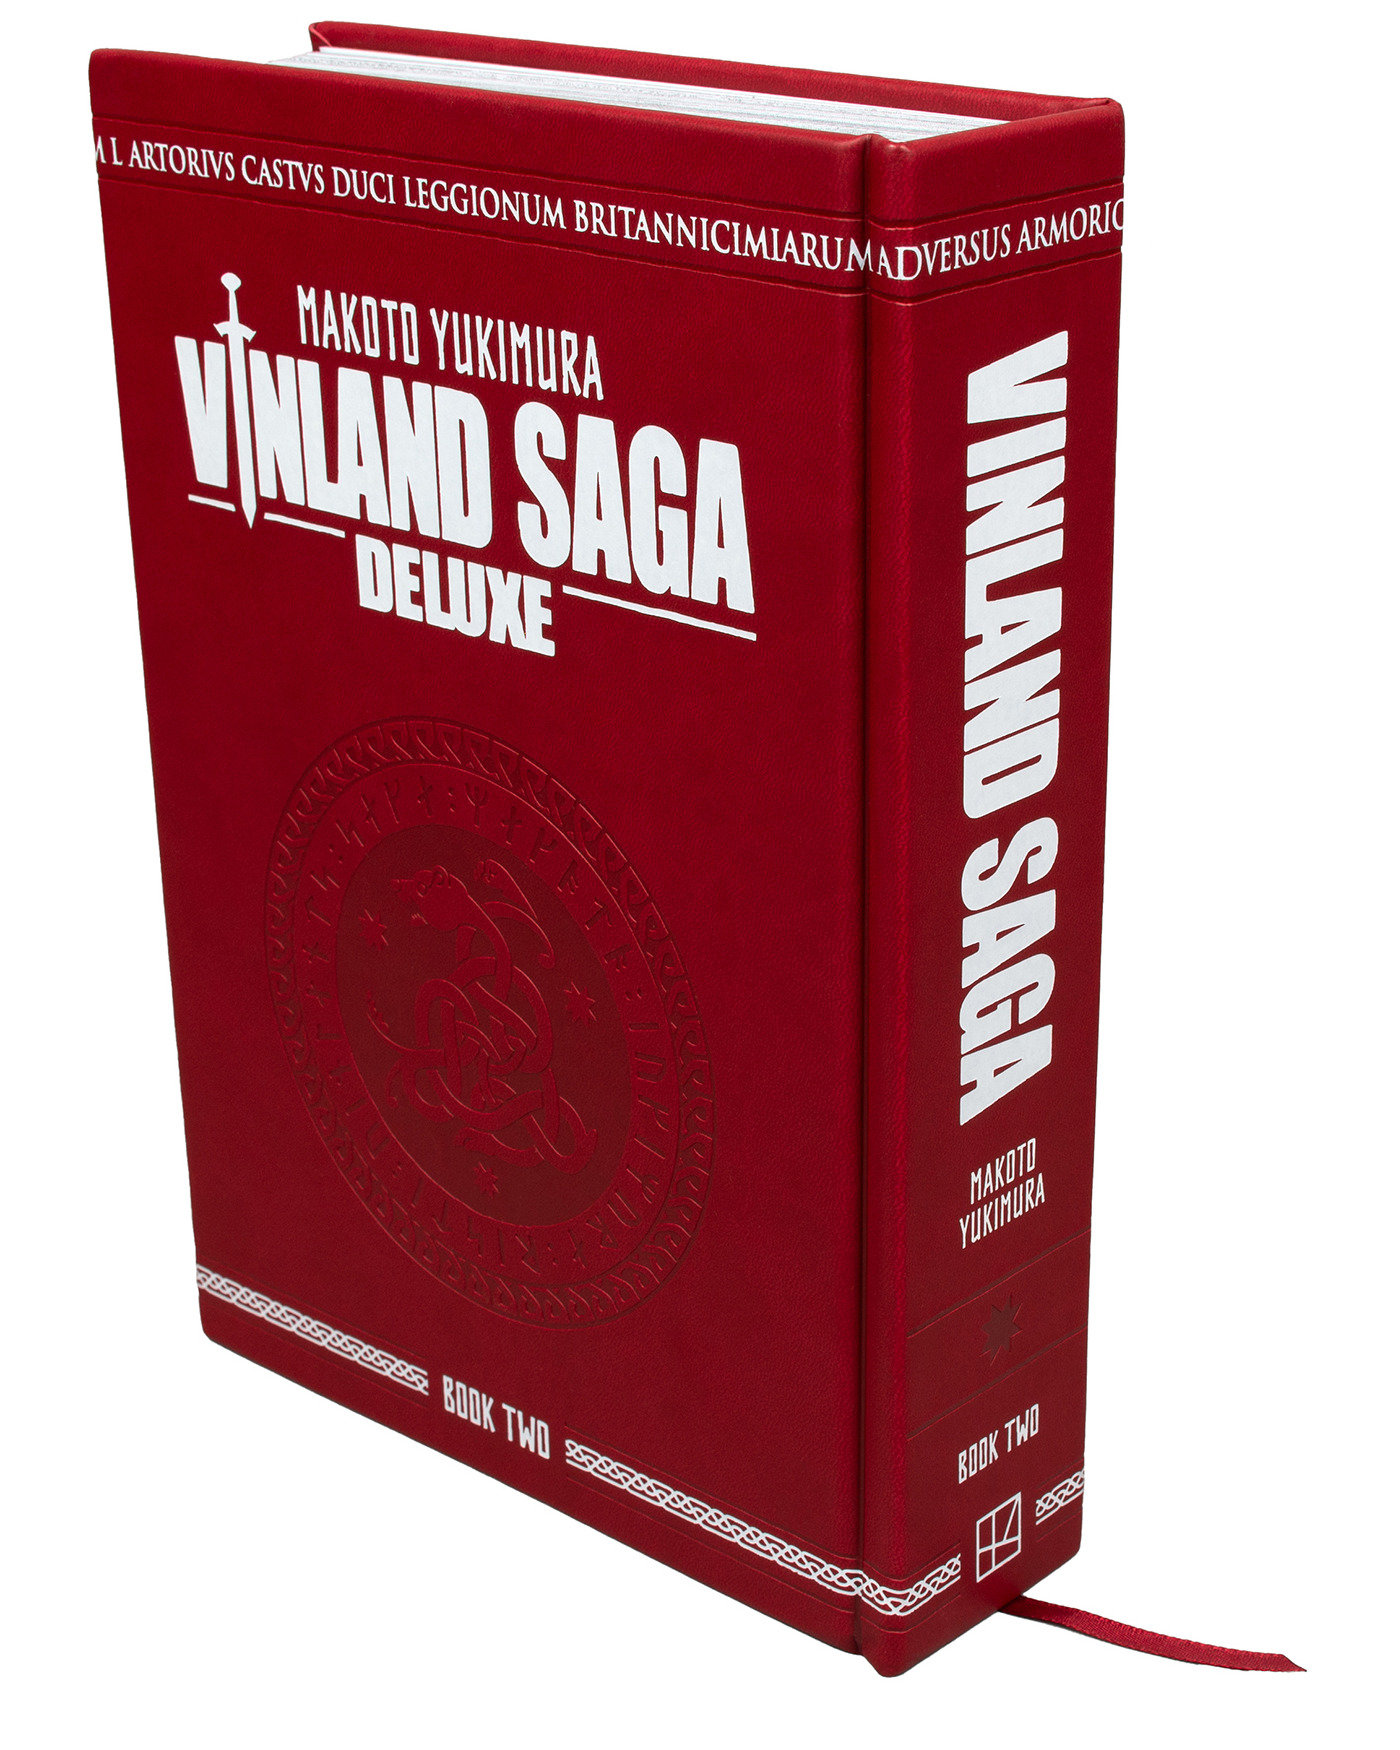 Vinland Saga Deluxe Hardcover Volume 2